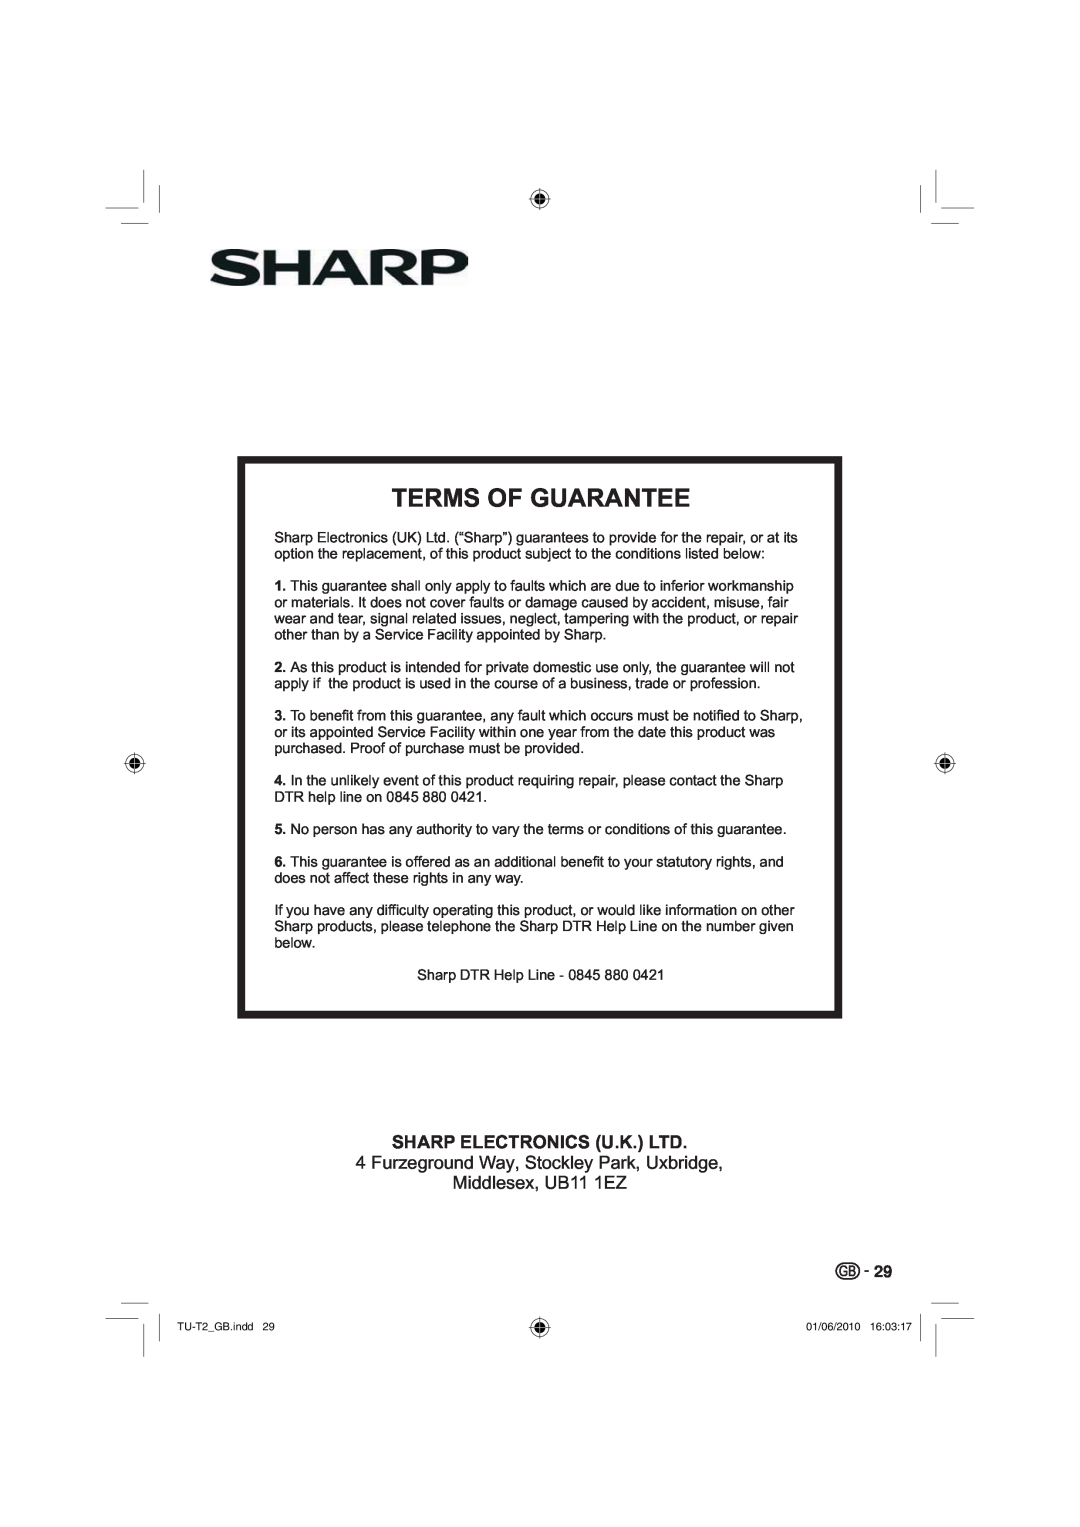 Sharp TU-T2 operation manual Terms Of Guarantee, Furzeground Way, Stockley Park, Uxbridge Middlesex, UB11 1EZ 